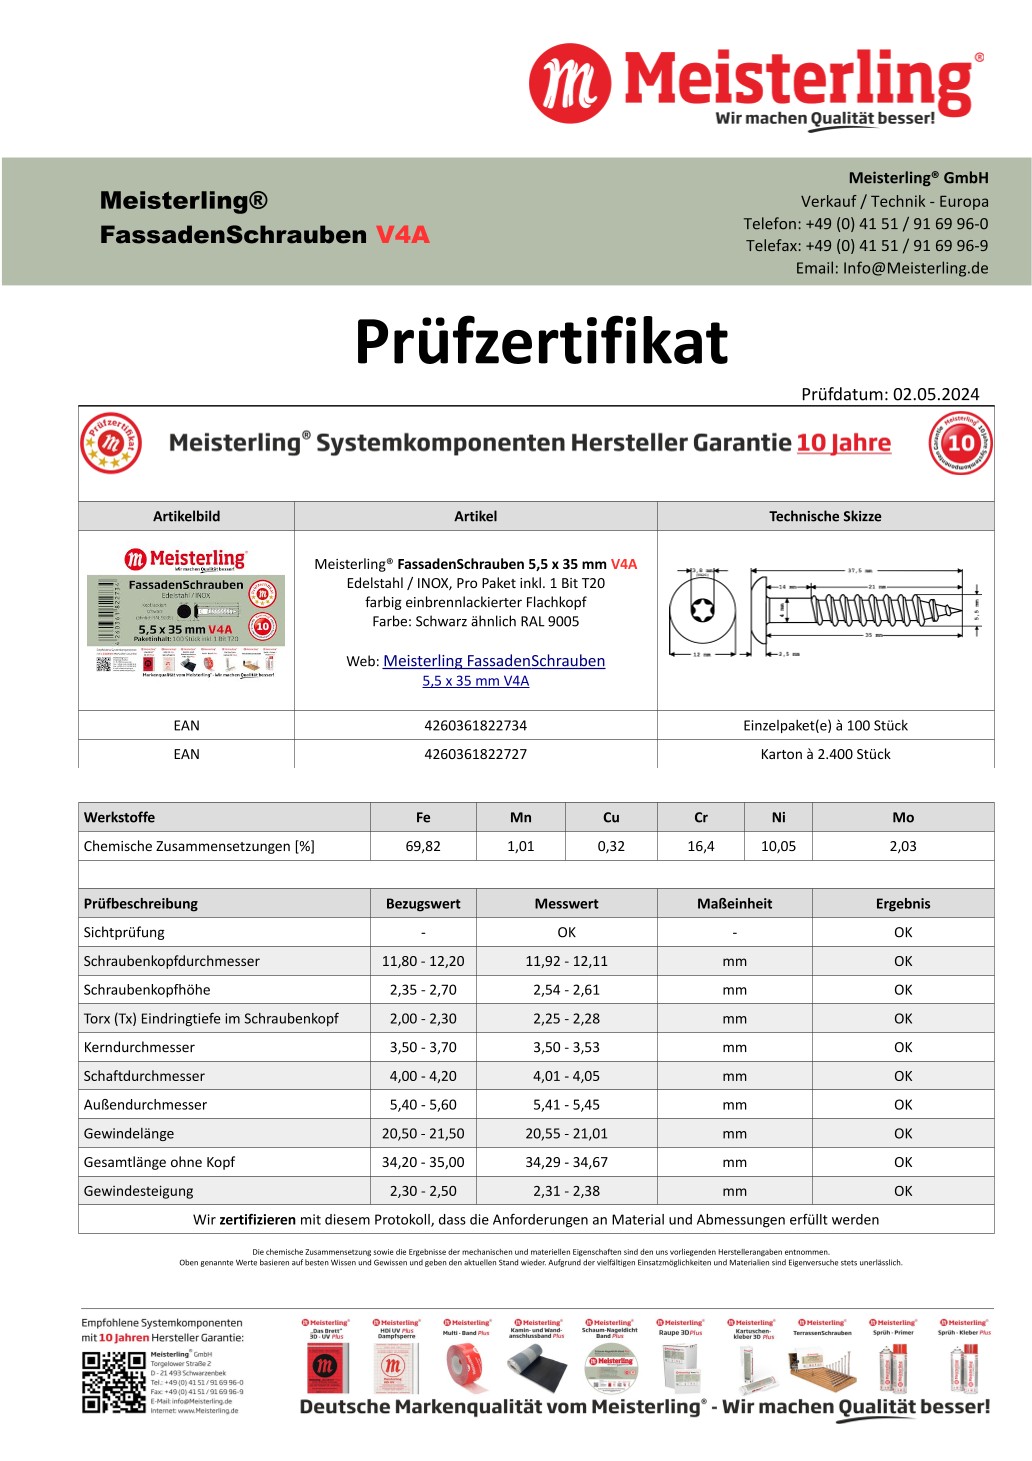 Prüfzertifikat Meisterling® FassadenSchrauben 5,5 x 35 mm V4a schwarz